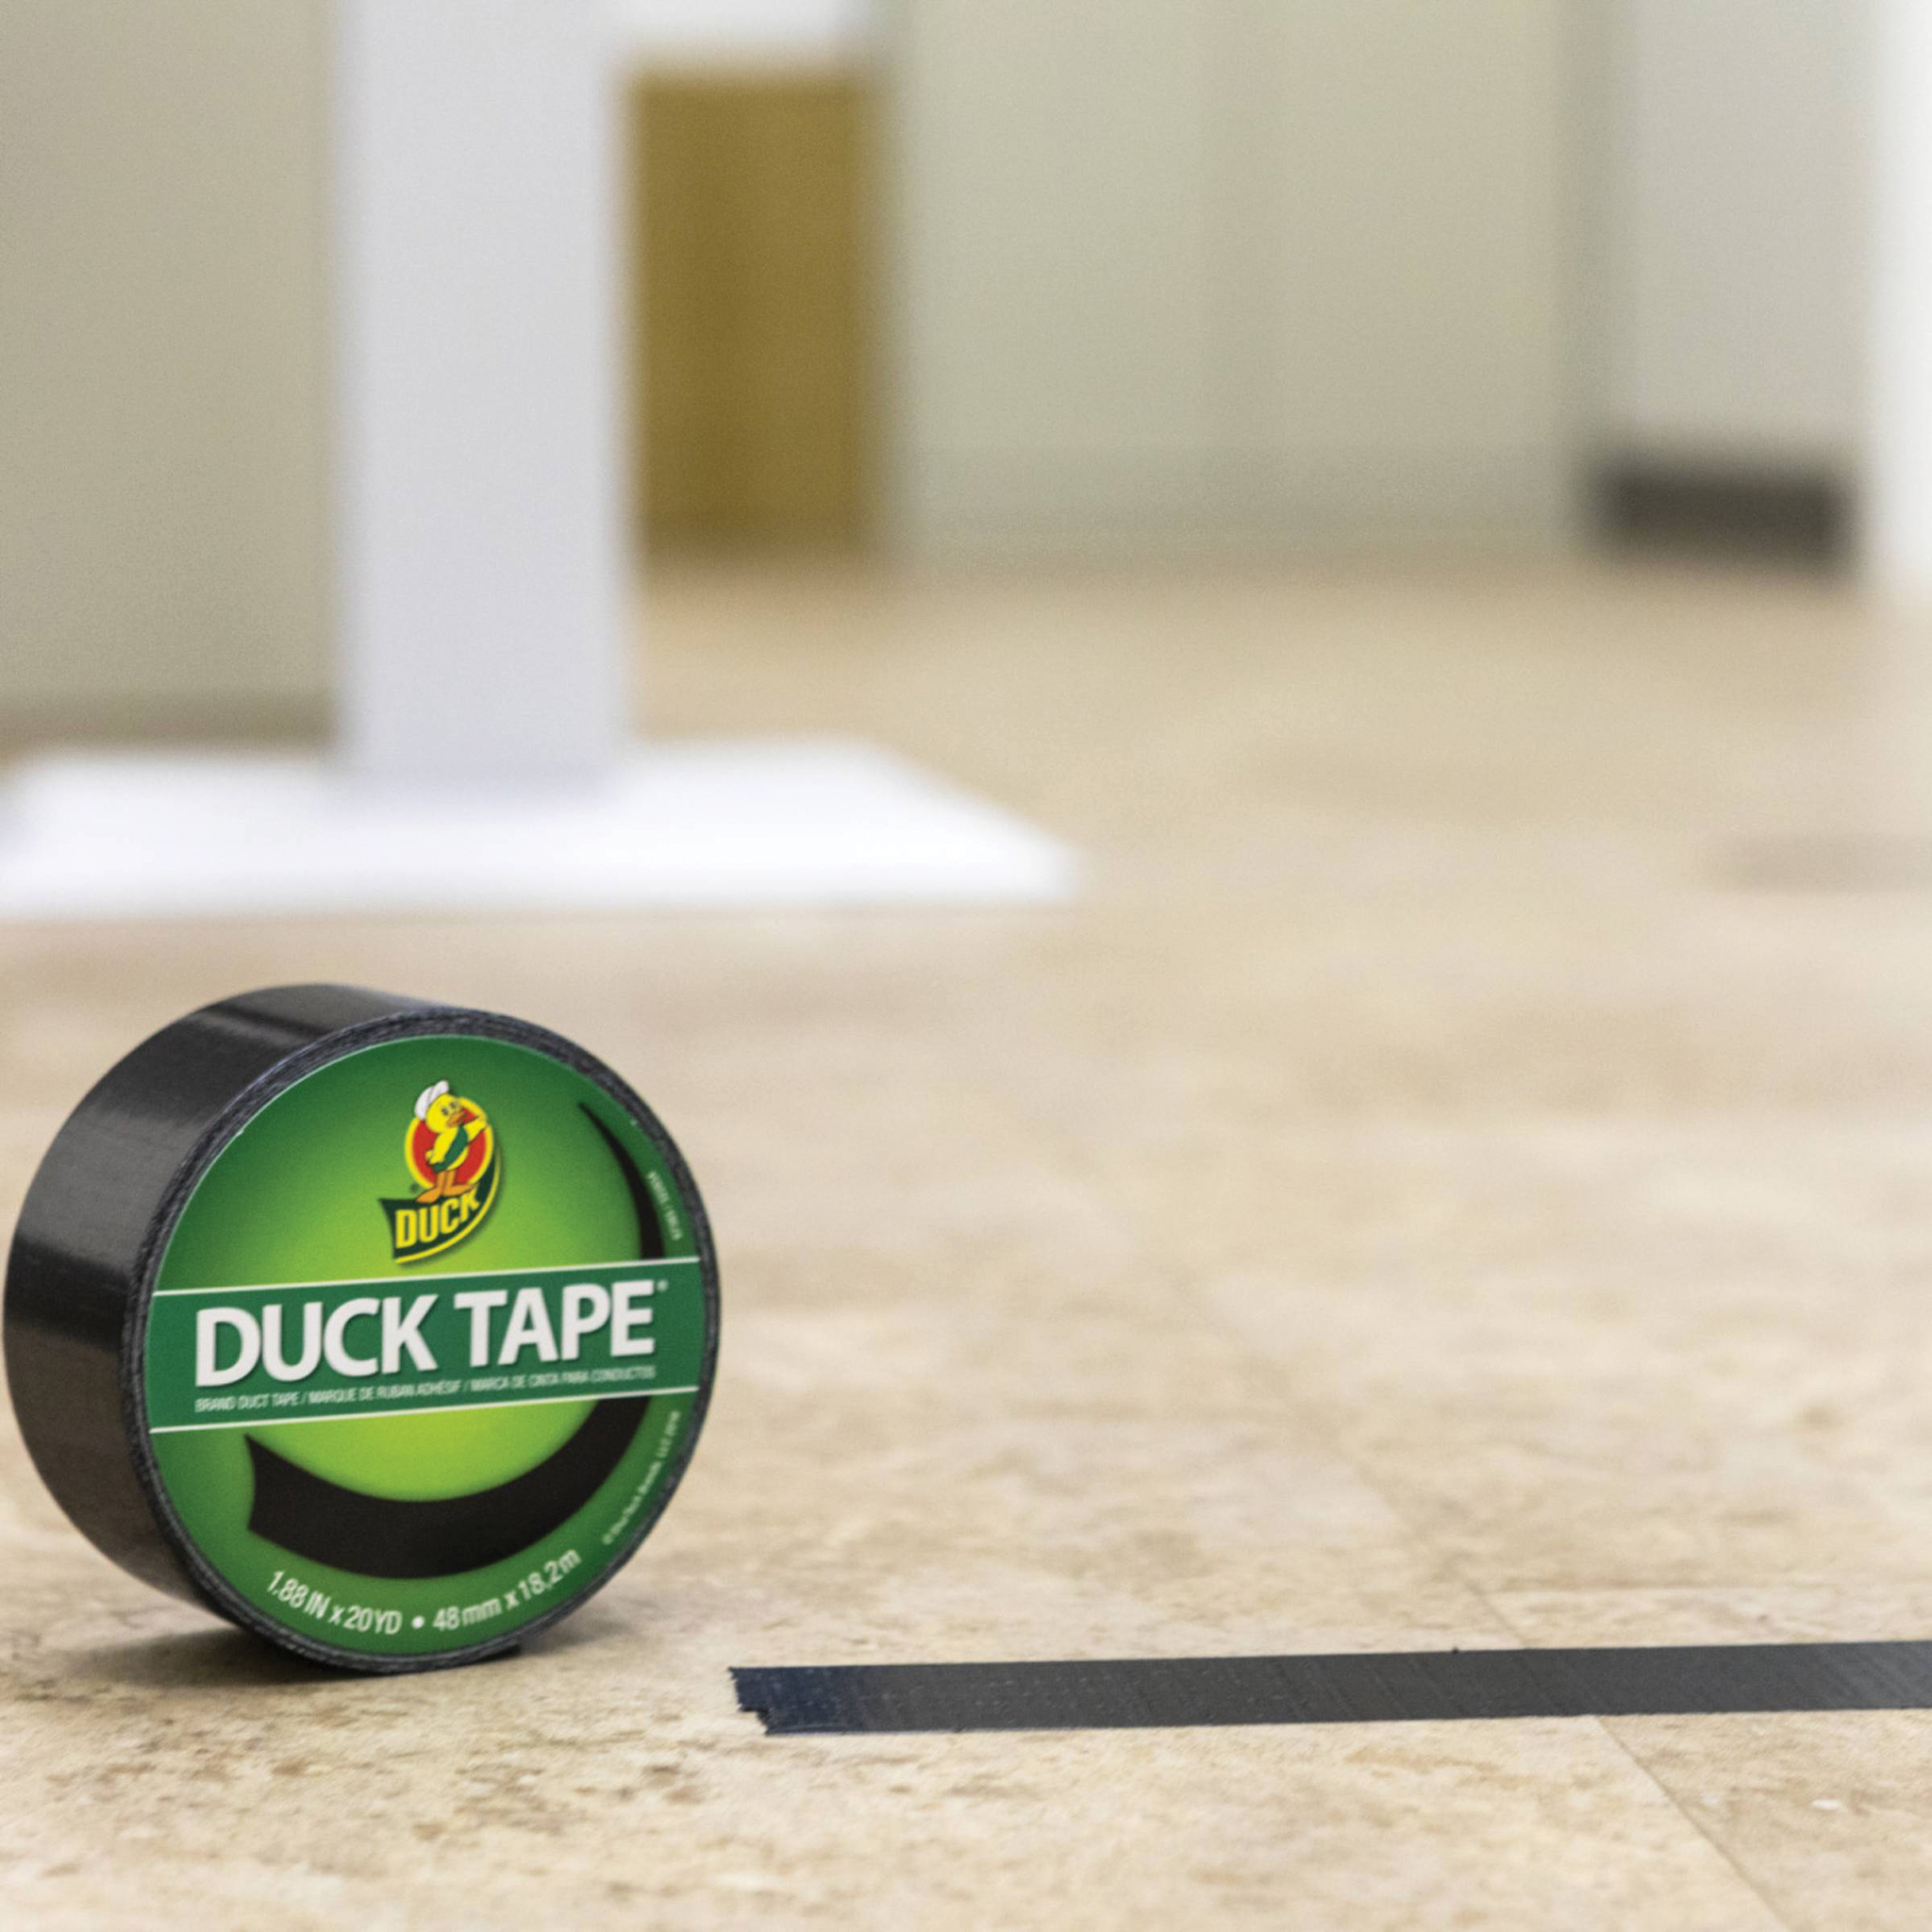 ShurTech Color Duck Tape - 1.88 x 20 yds, Beige